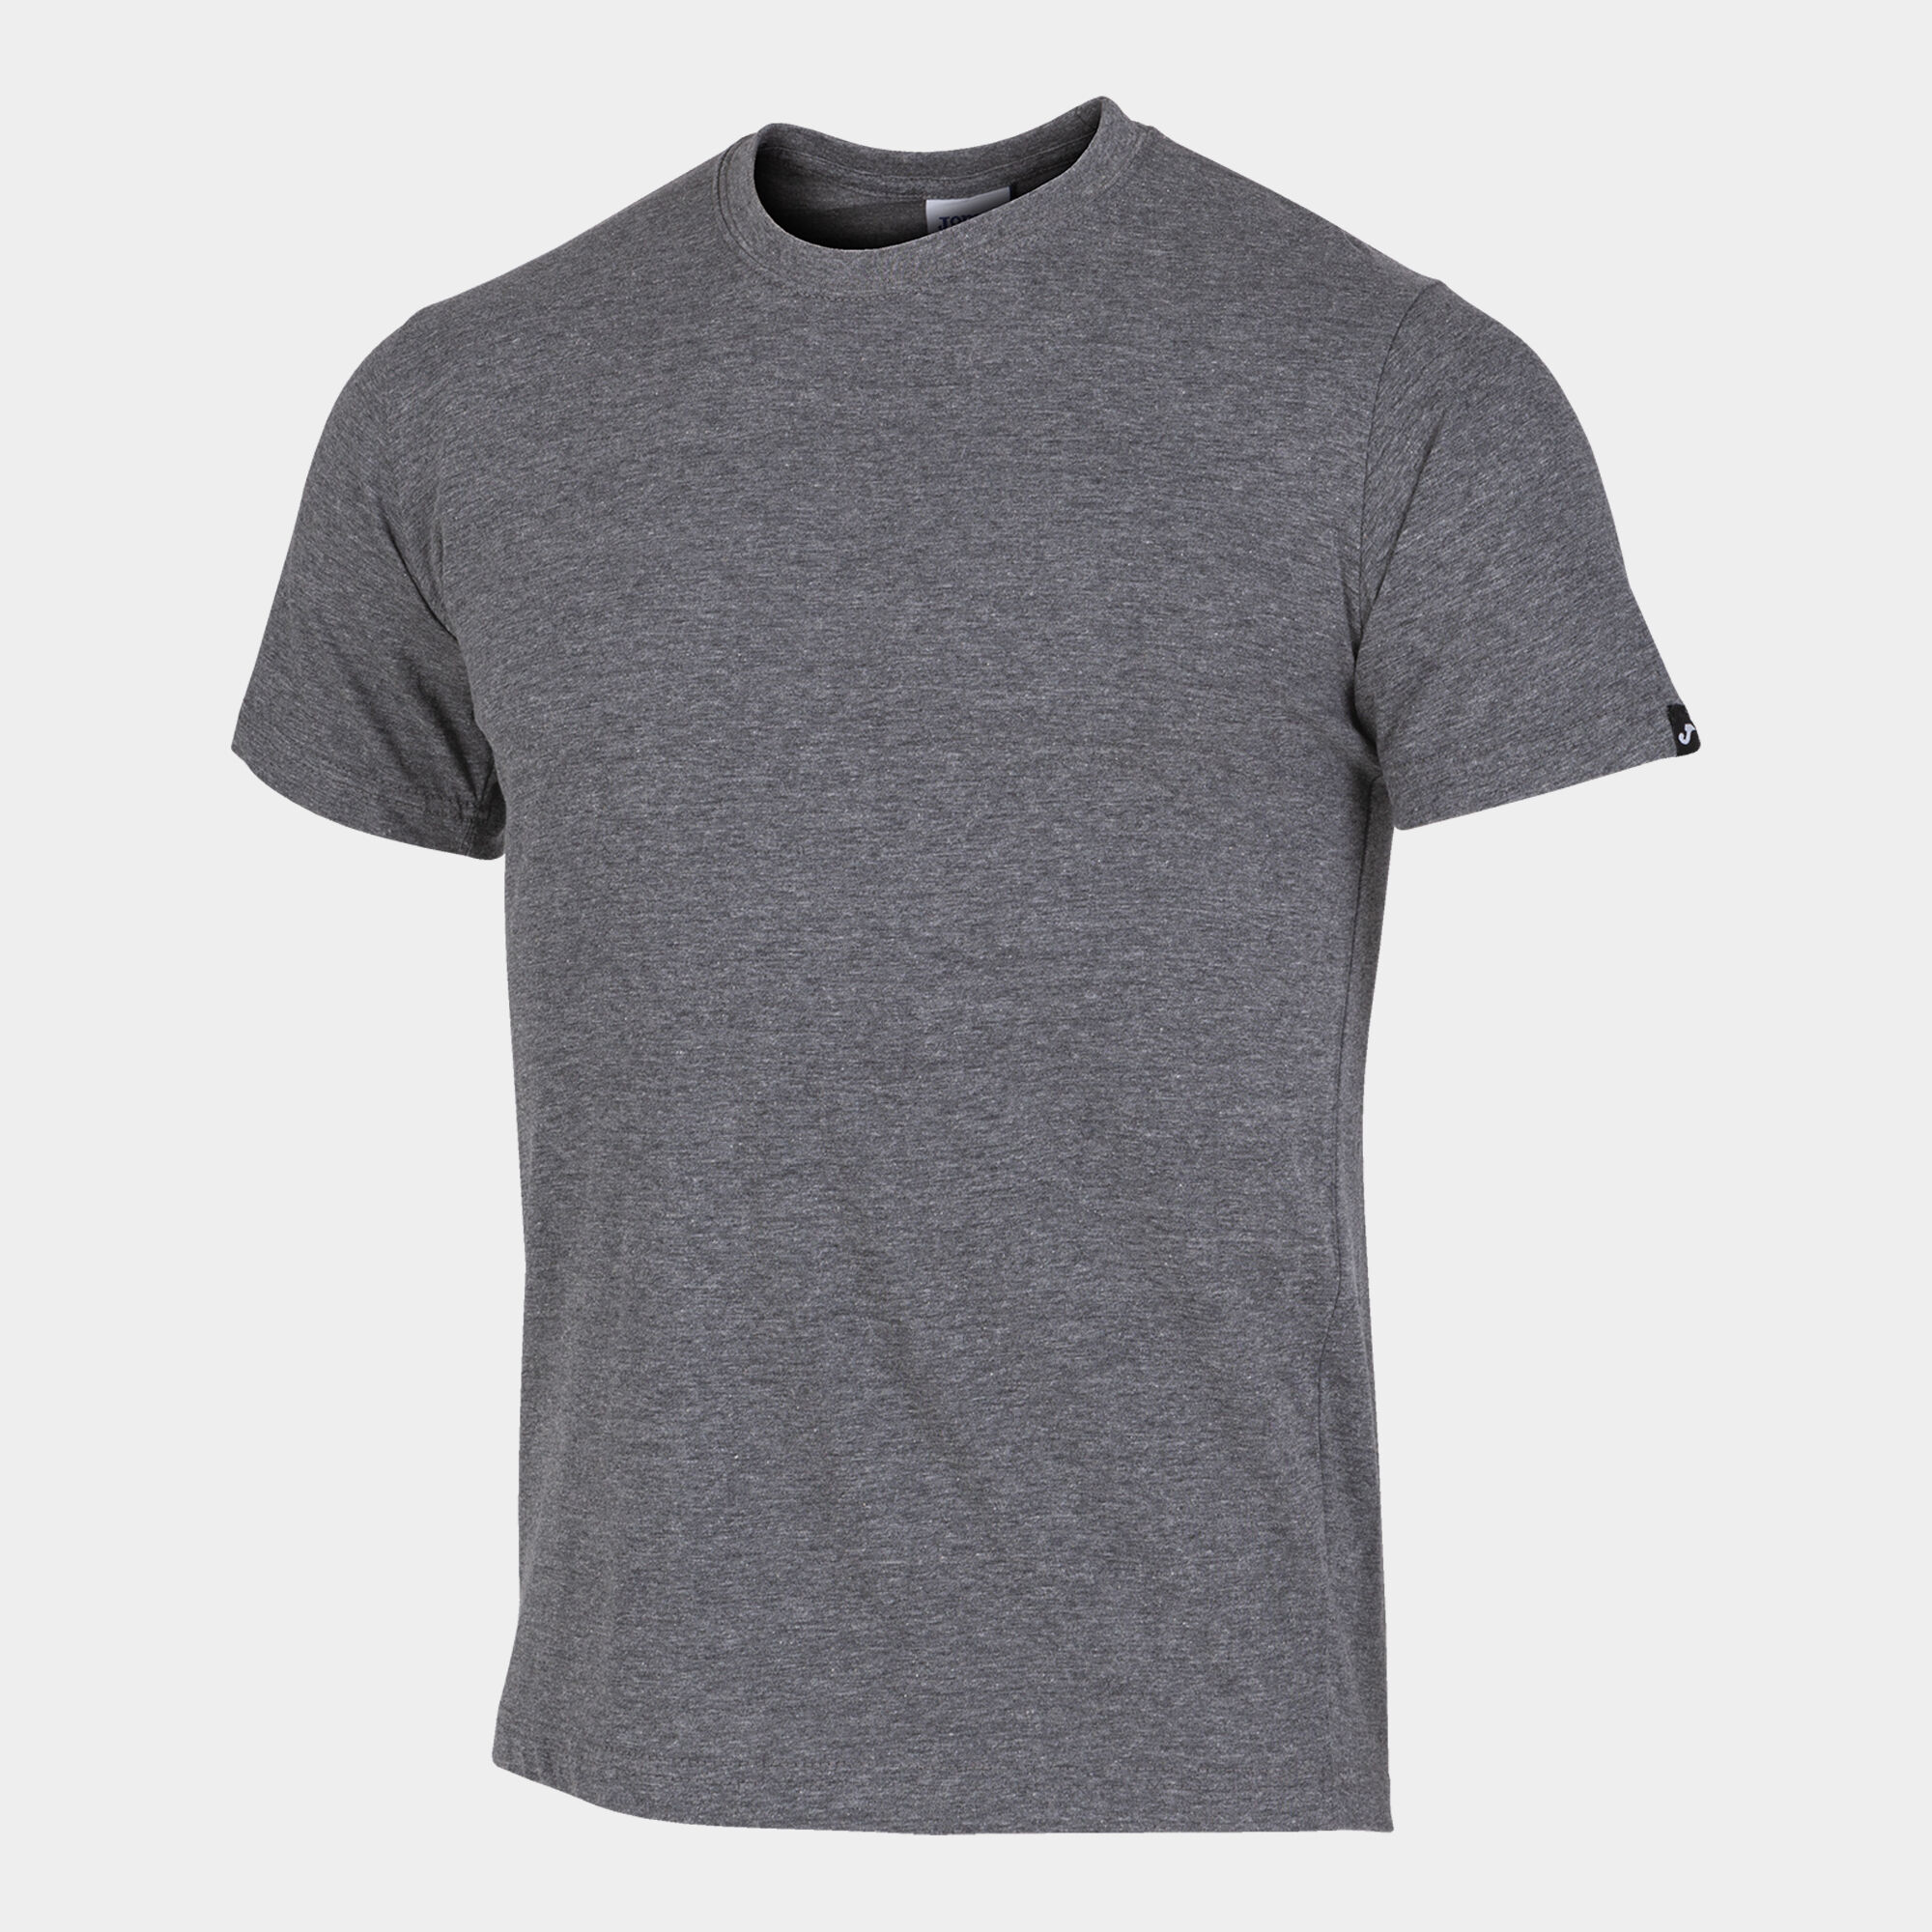 JOMA - Camiseta gris oscuro melange Combi Hombre